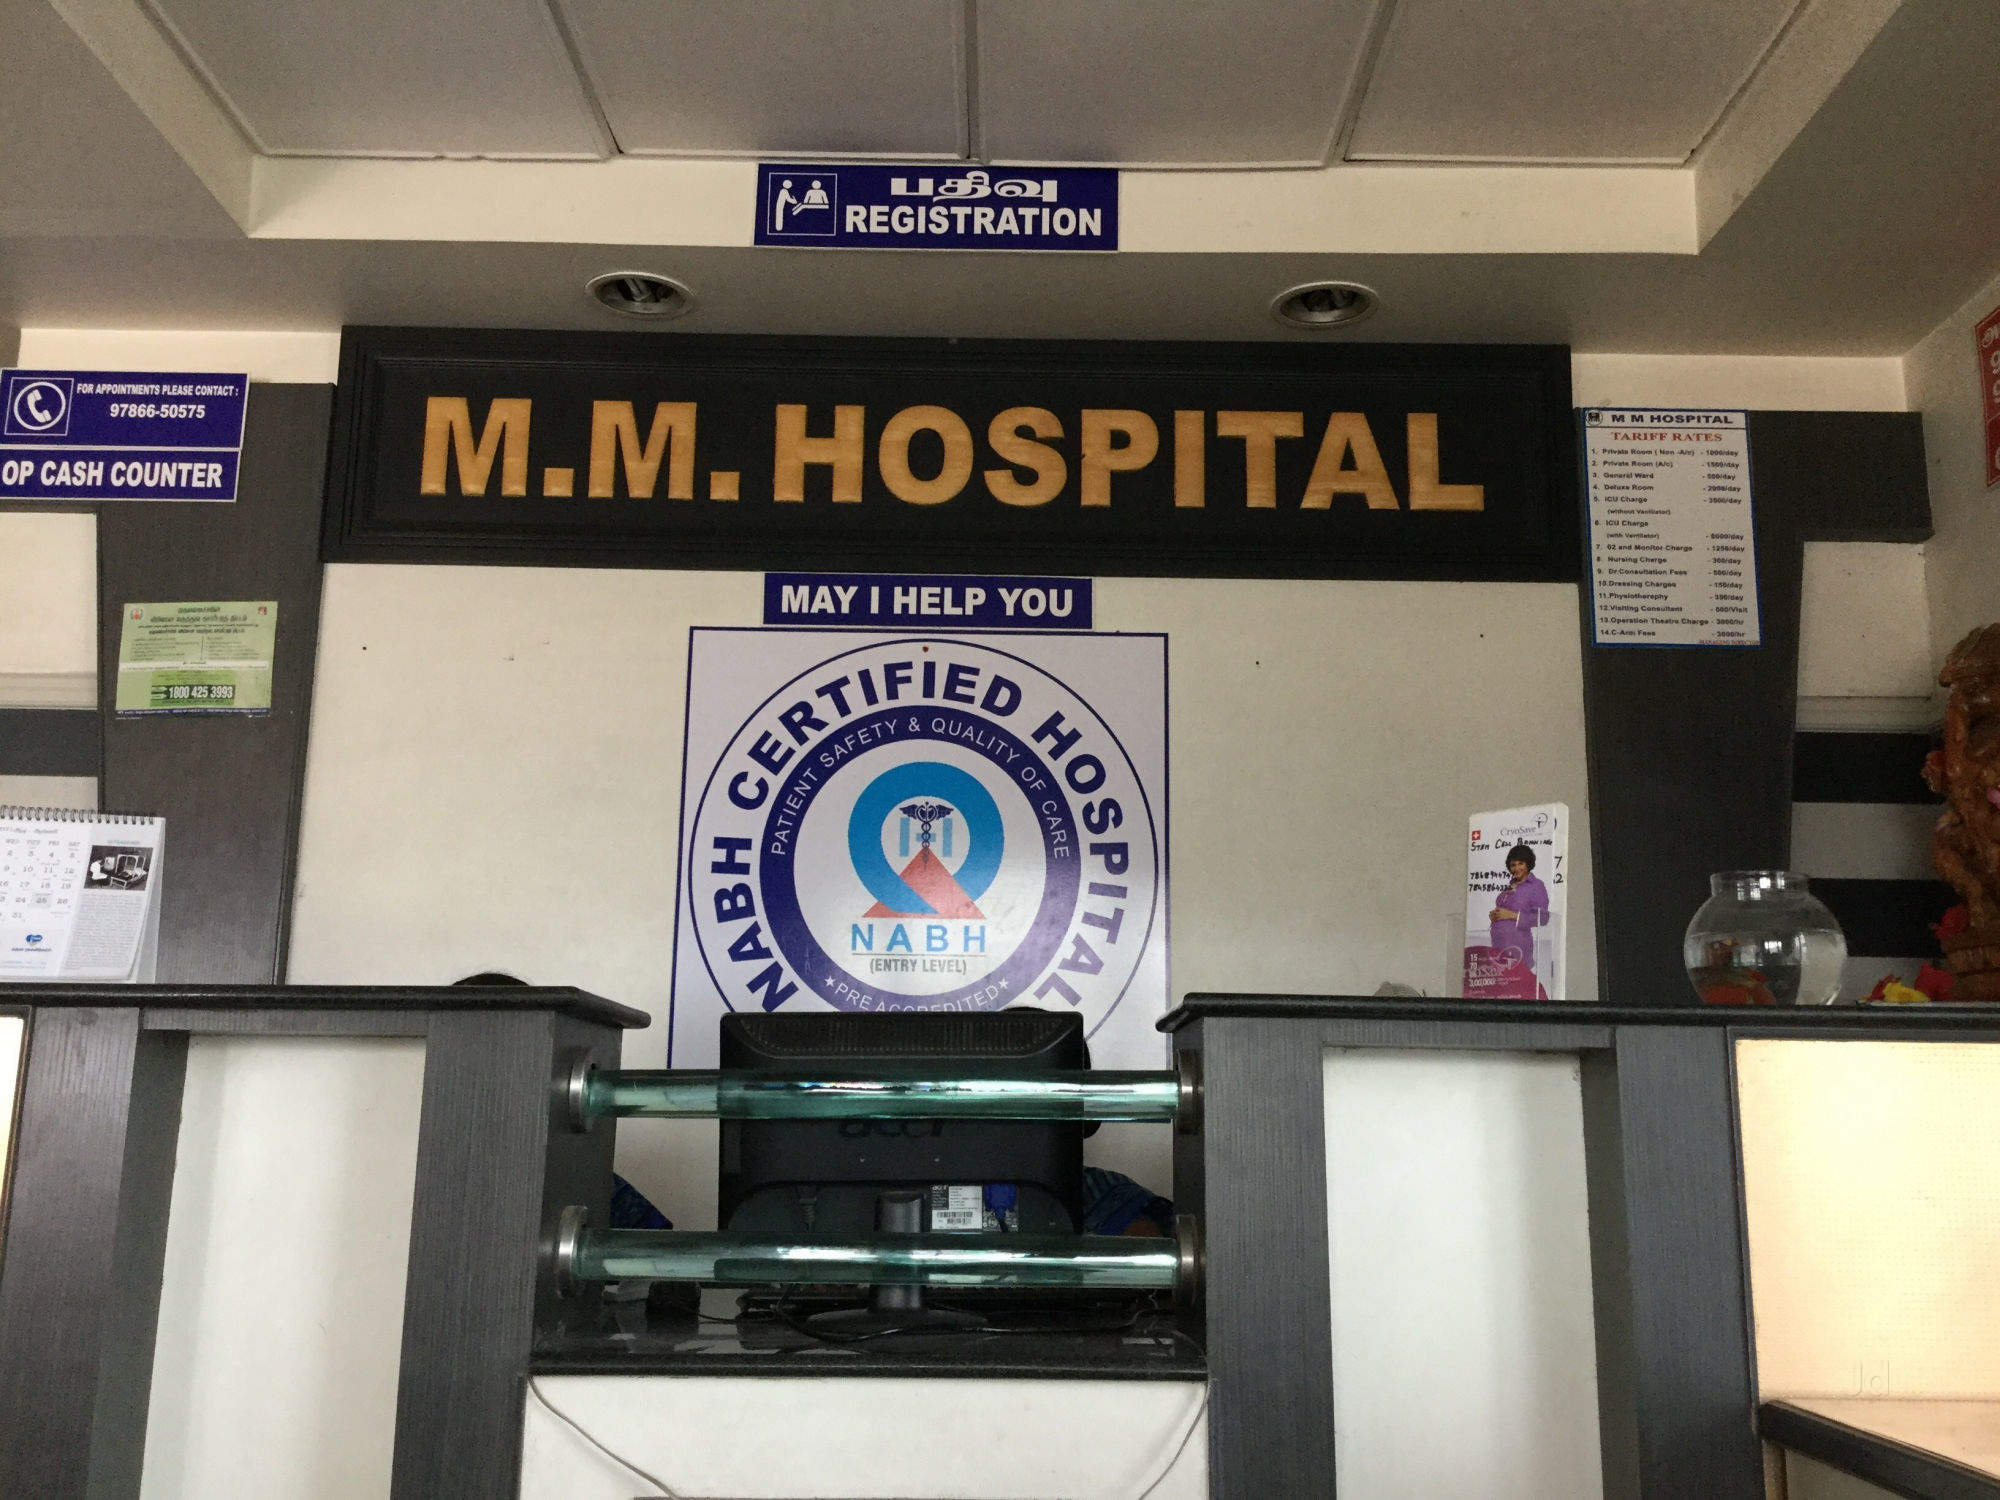 M.M. Hospital|Hospitals|Medical Services